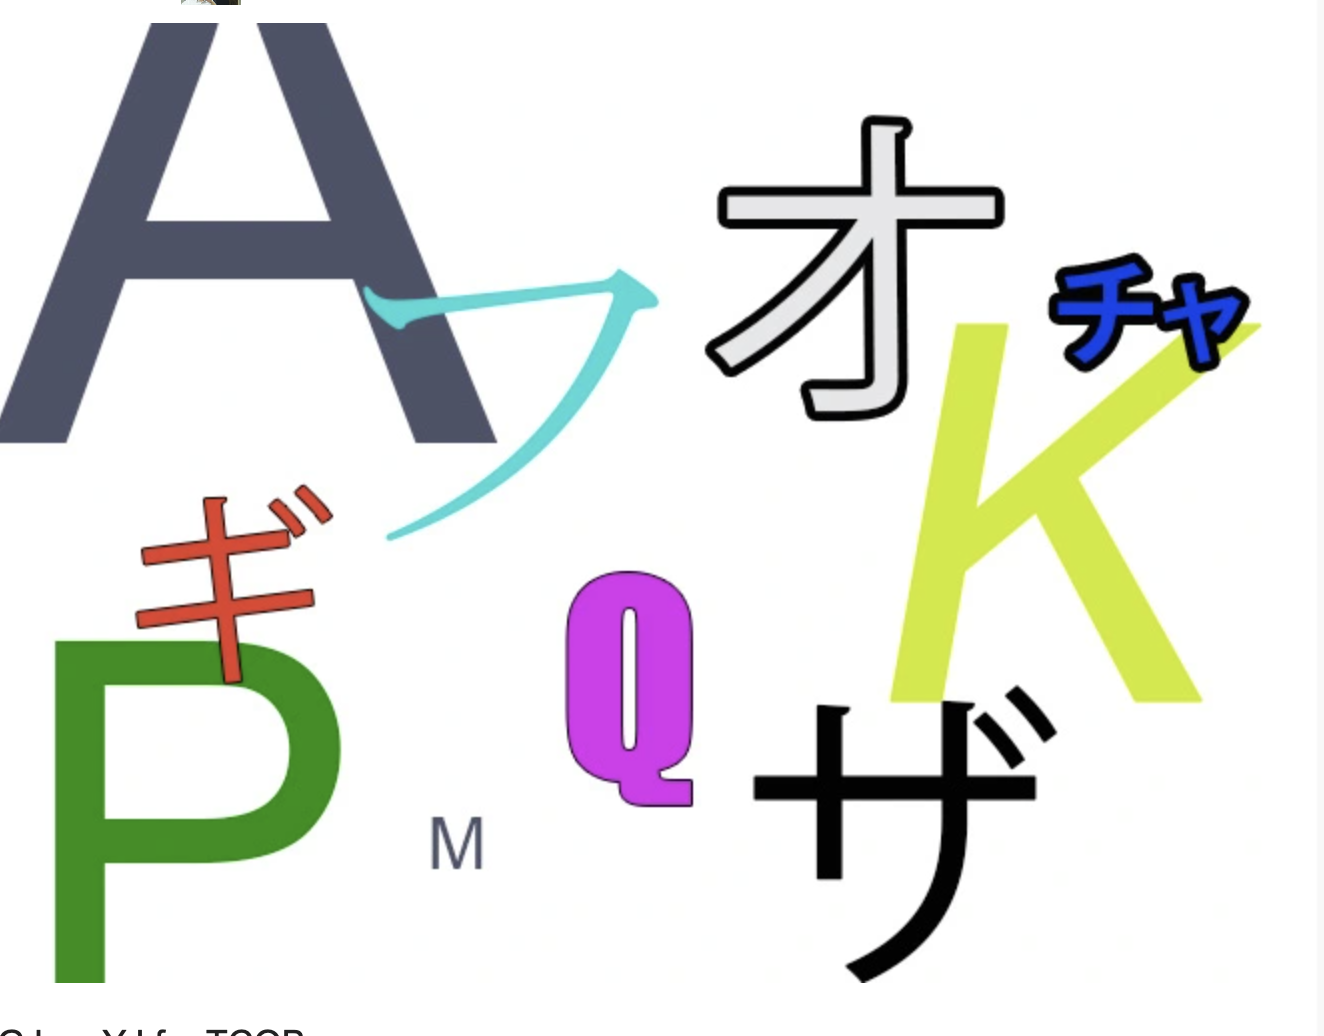 иллюстрации для стима katakana фото 30